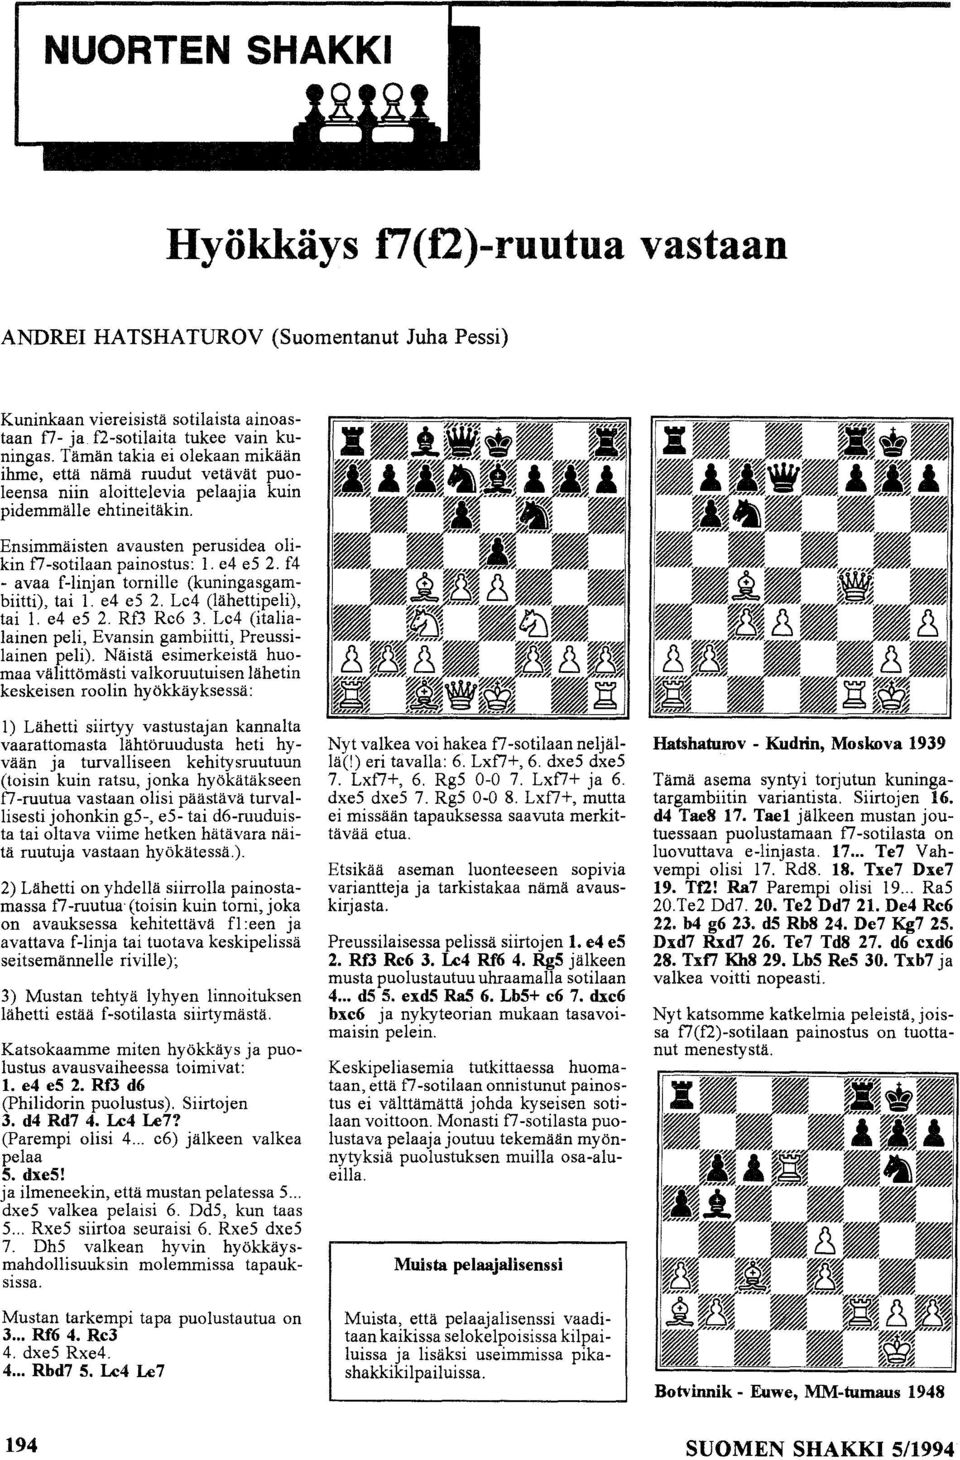 e4 e5 2. f4 - avaa f-linjan tomille (kuningasgambiitti), tai 1. e4 e5 2. Lc4 (lähettipeli), tai 1. e4 e5 2. Rf3 Rc6 3. Lc4 (italialainen peli, Evansin gambiitti, Preussilainen peli).